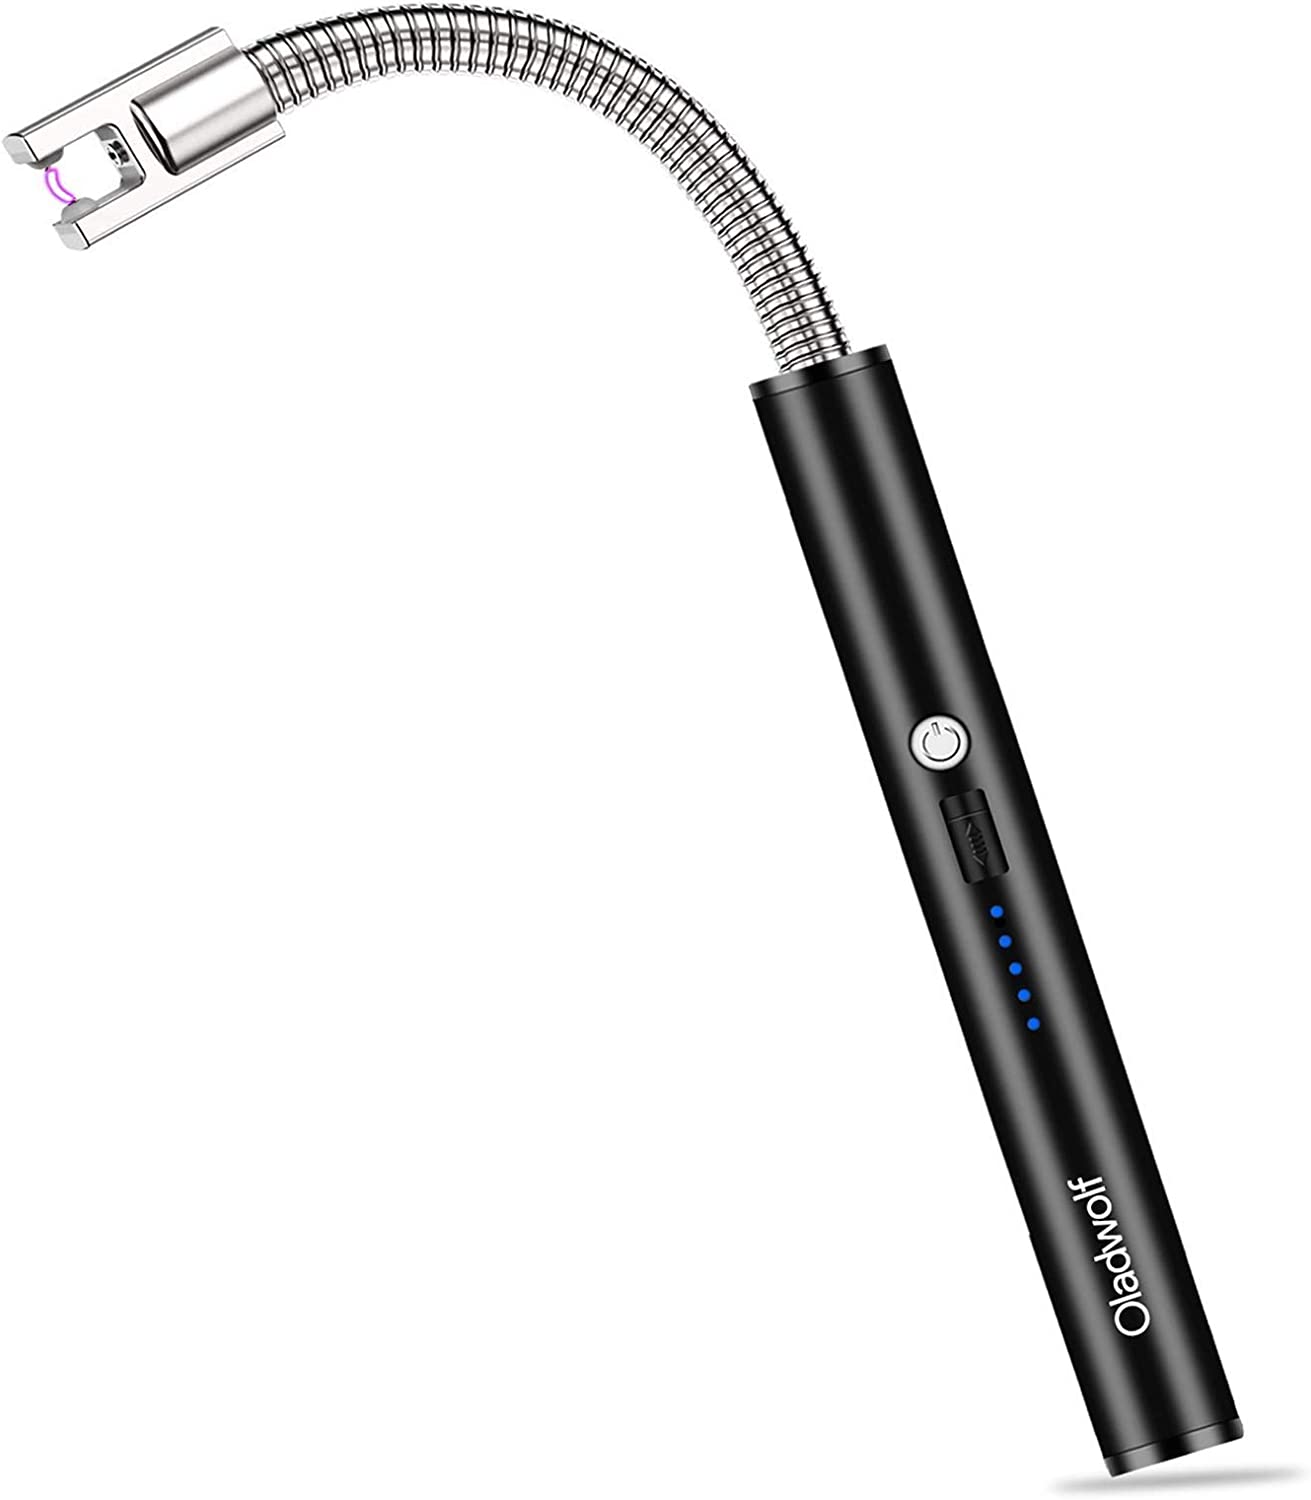 ASANMU Mini Mechero Electrico, USB Encendedor Electrico Pantalla